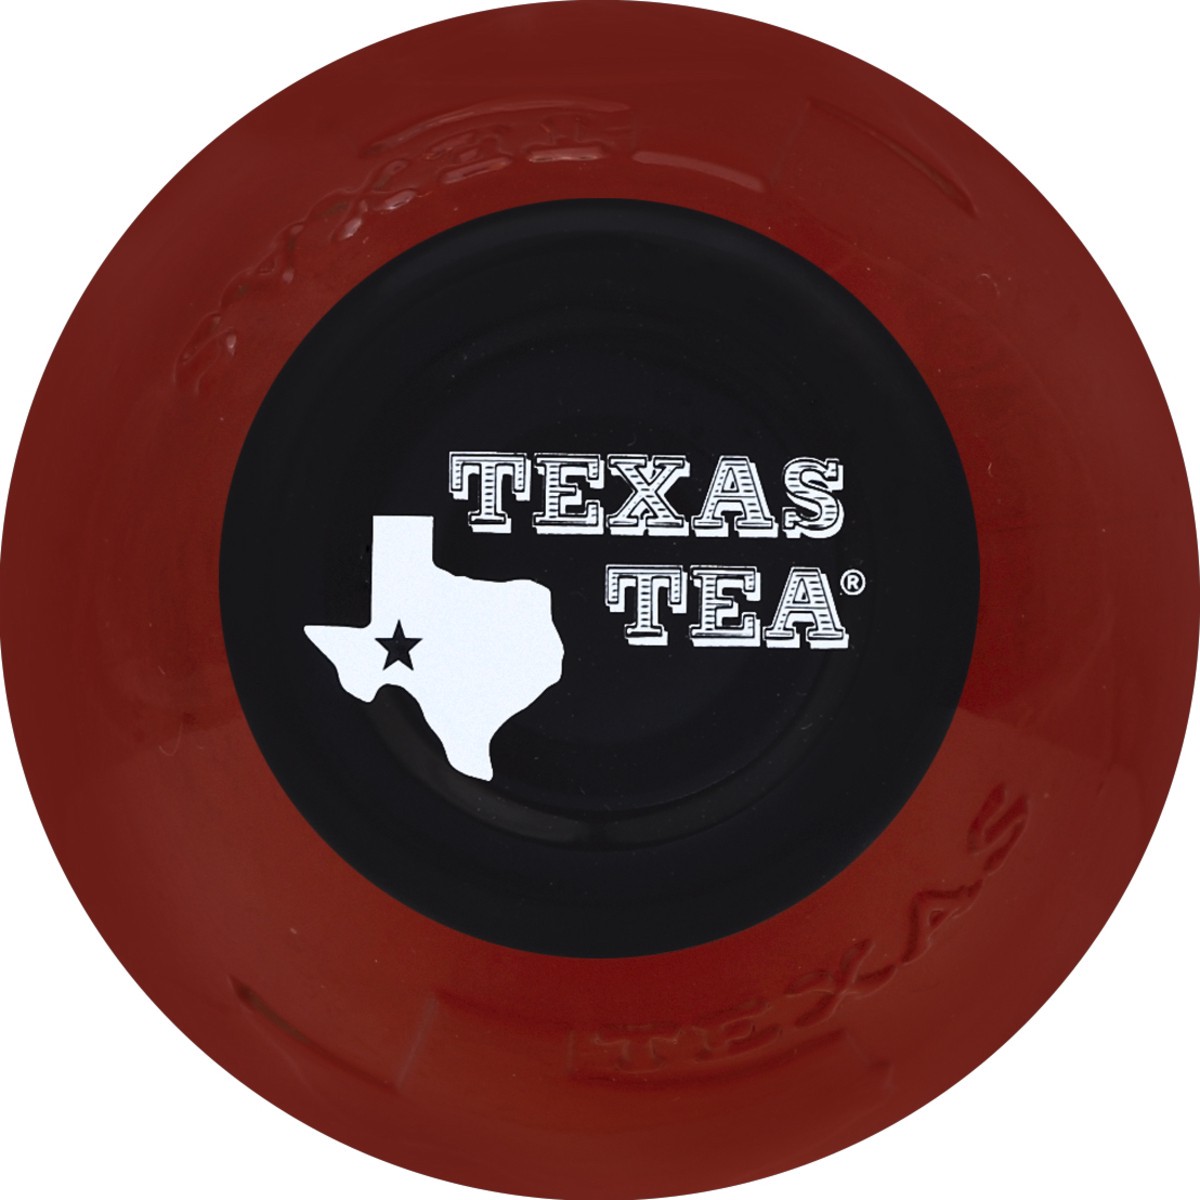 slide 4 of 4, Texas Tea Green Tea 16 oz, 16 oz